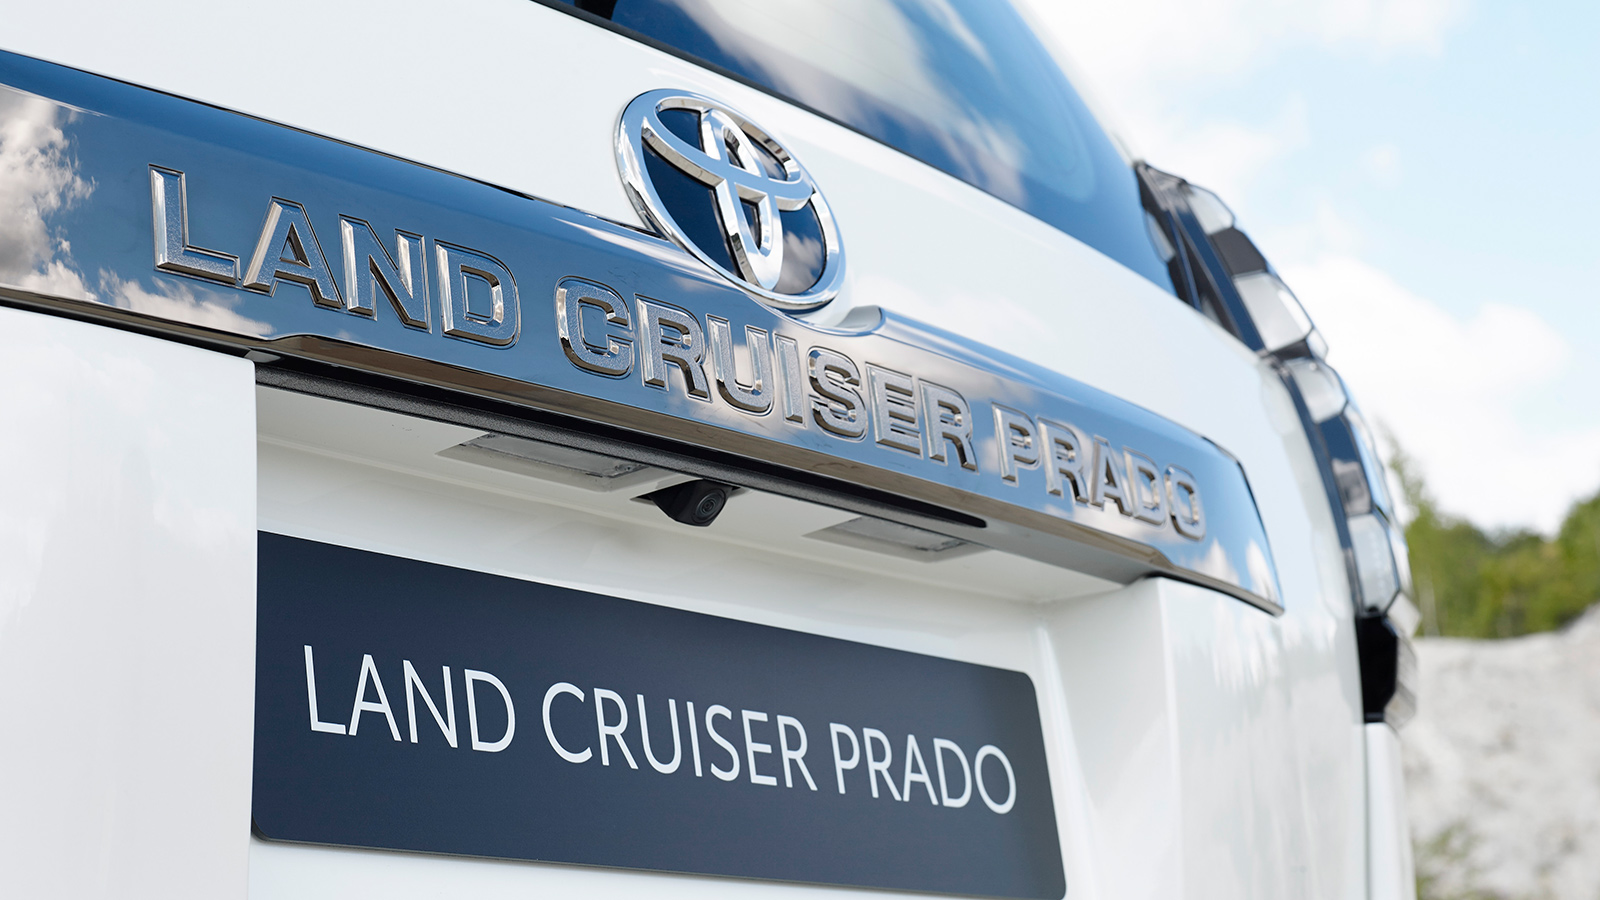 2022 TOYOTA Land Cruiser PRADO 4WD 2,7 л 163 лс 6 АКПП Белый 5 Мест Бензин